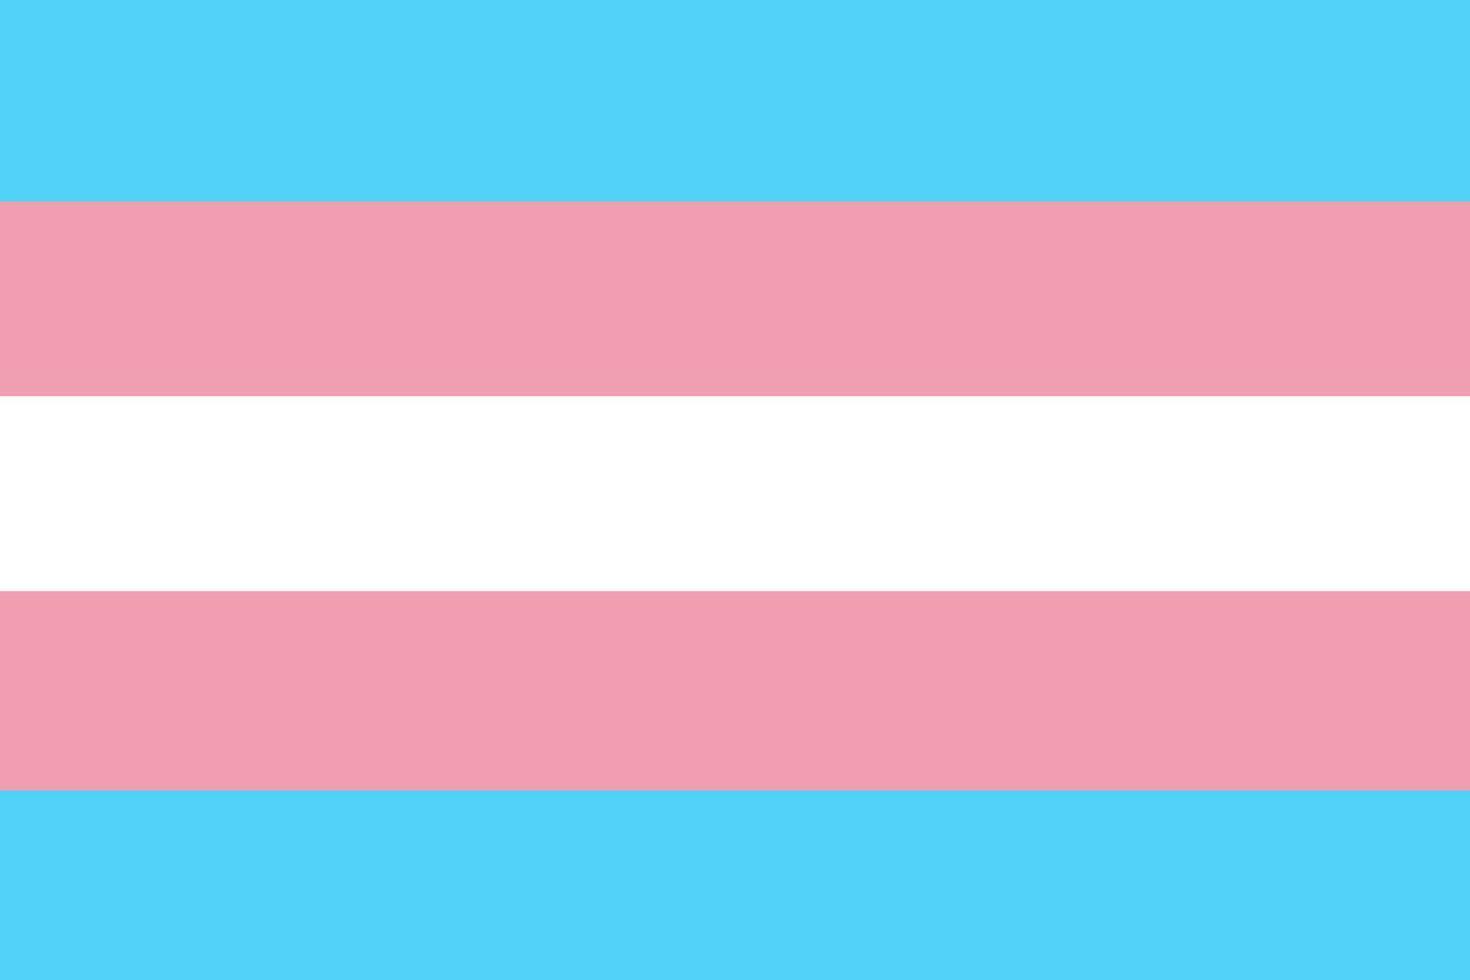 transgender vlag. symbool beweging lgbt. element van seksueel minderheden, homo's en lesbiennes. vector illustratie.